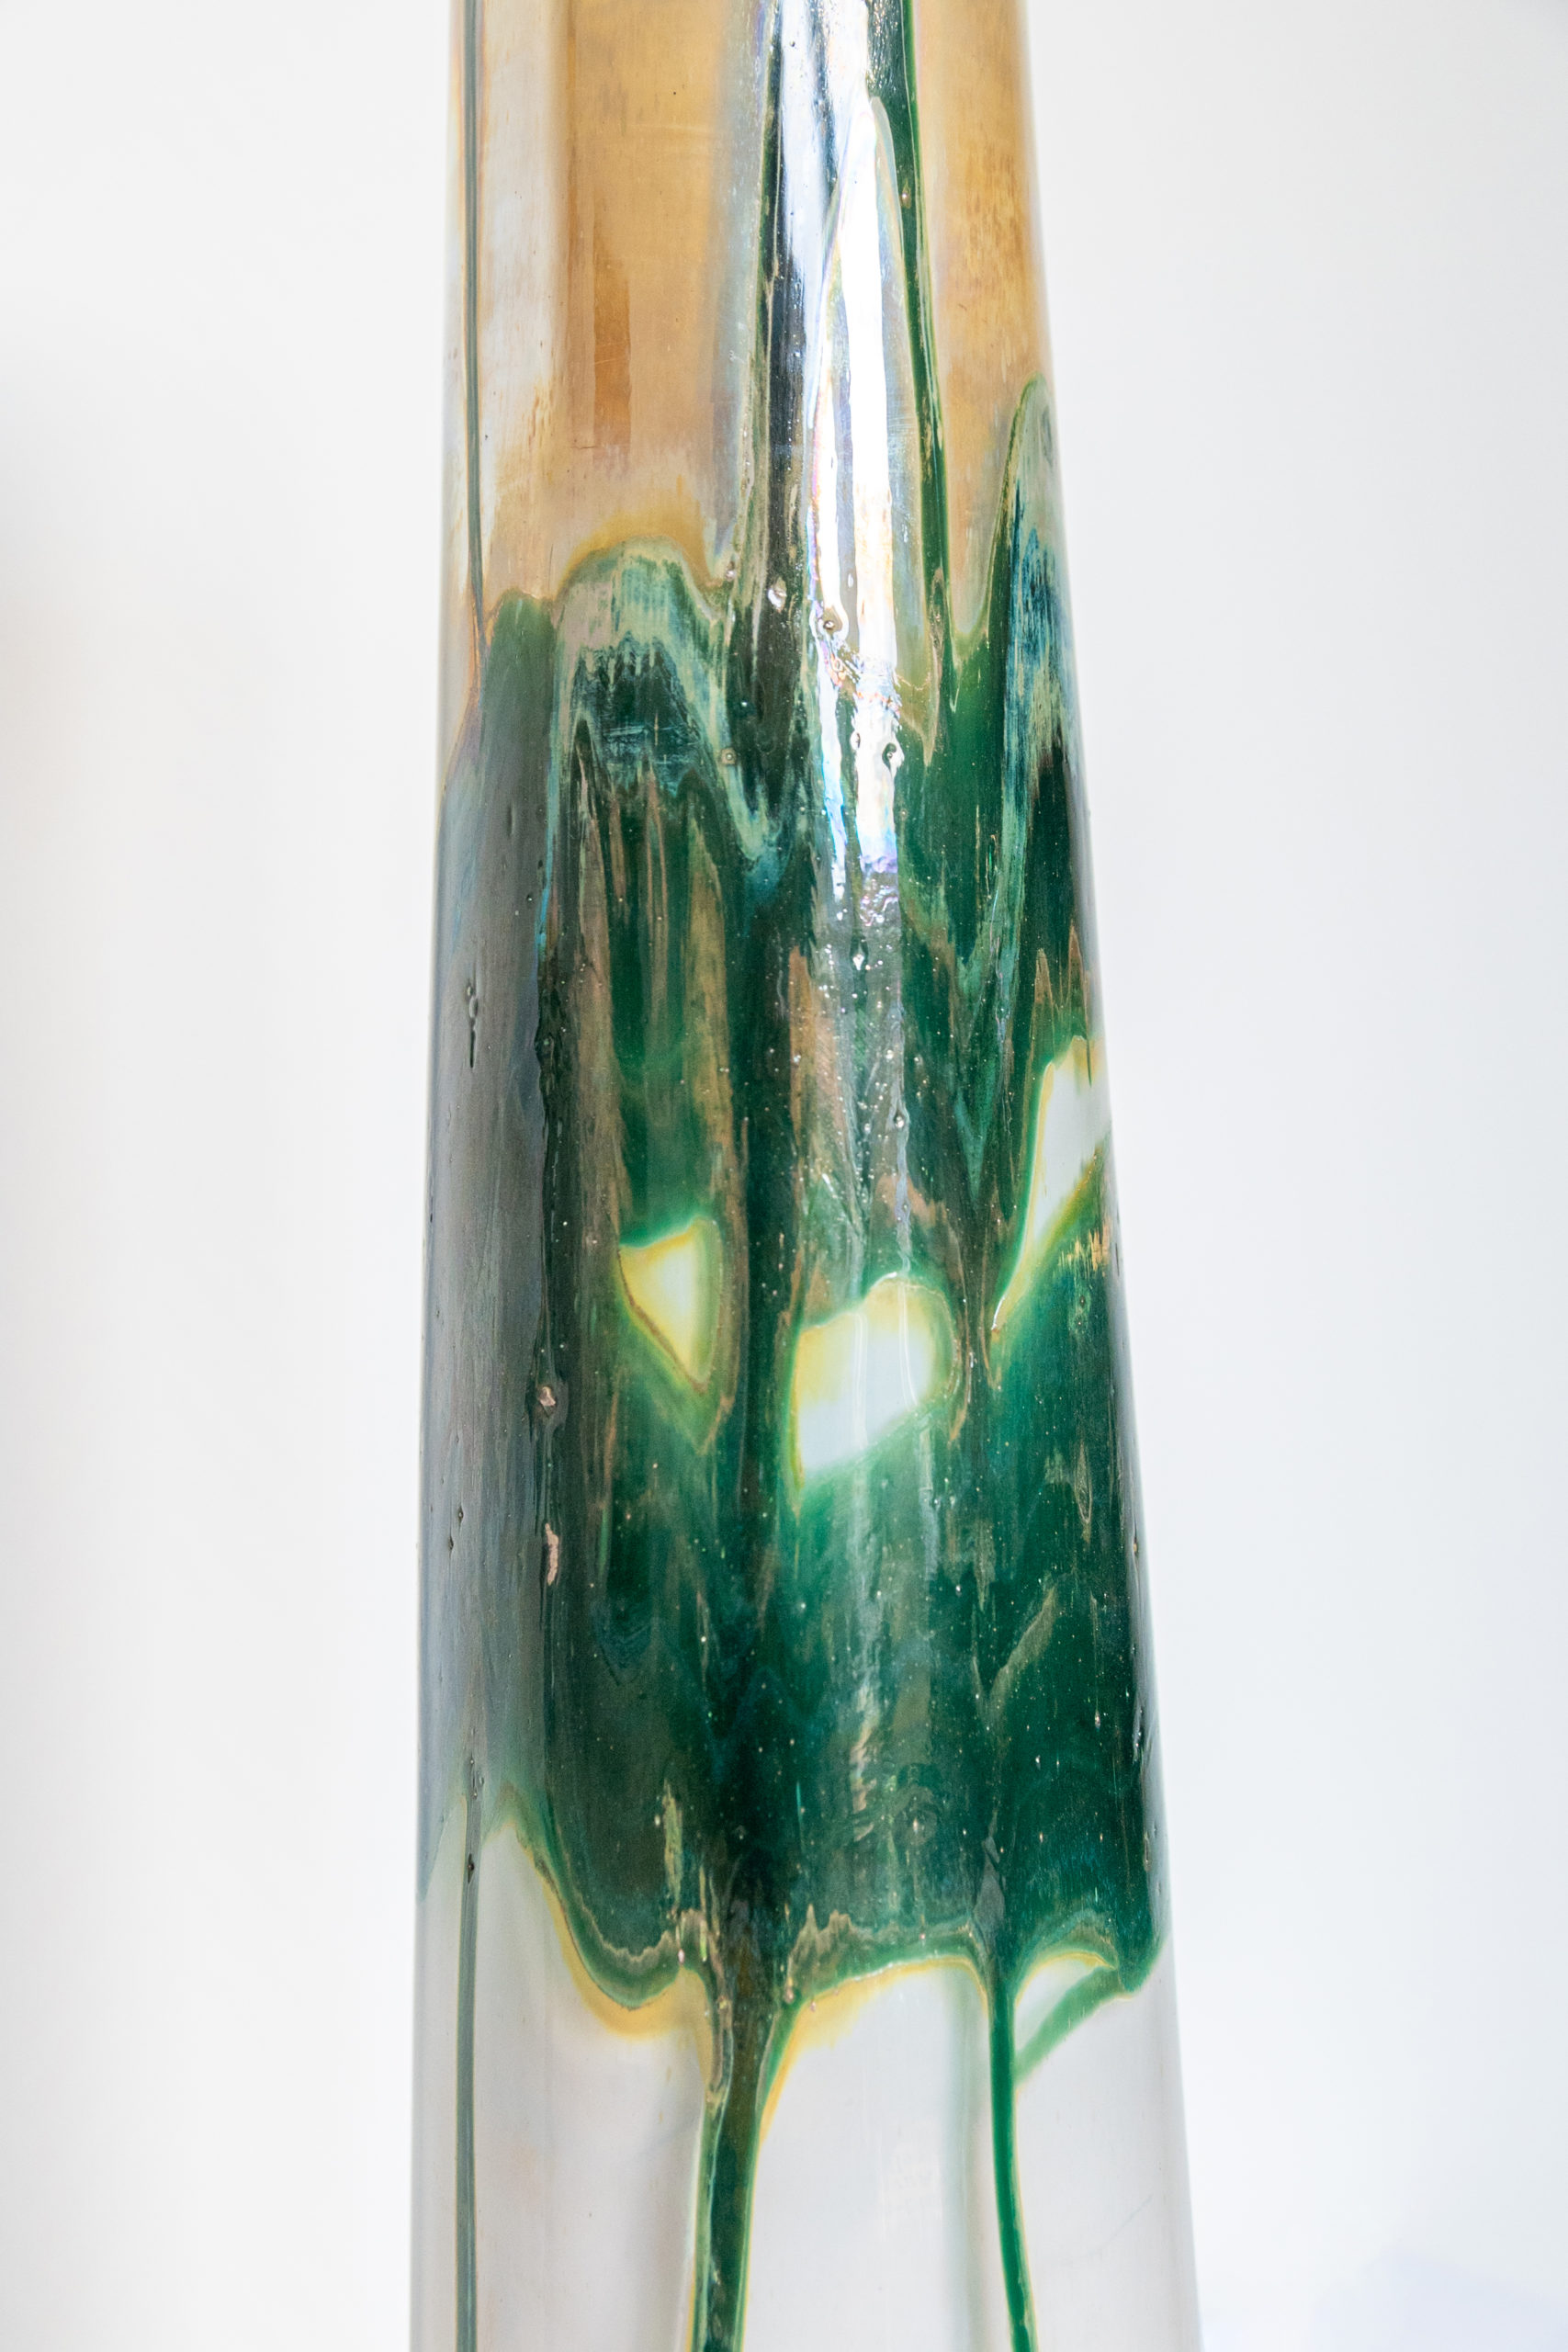 Vase-louis-leloup-louisleloup-samuelherman-valsaintlambert-auroremorisse-antiquaire-verrerie-antiquités-collections-vase-caracas-19723